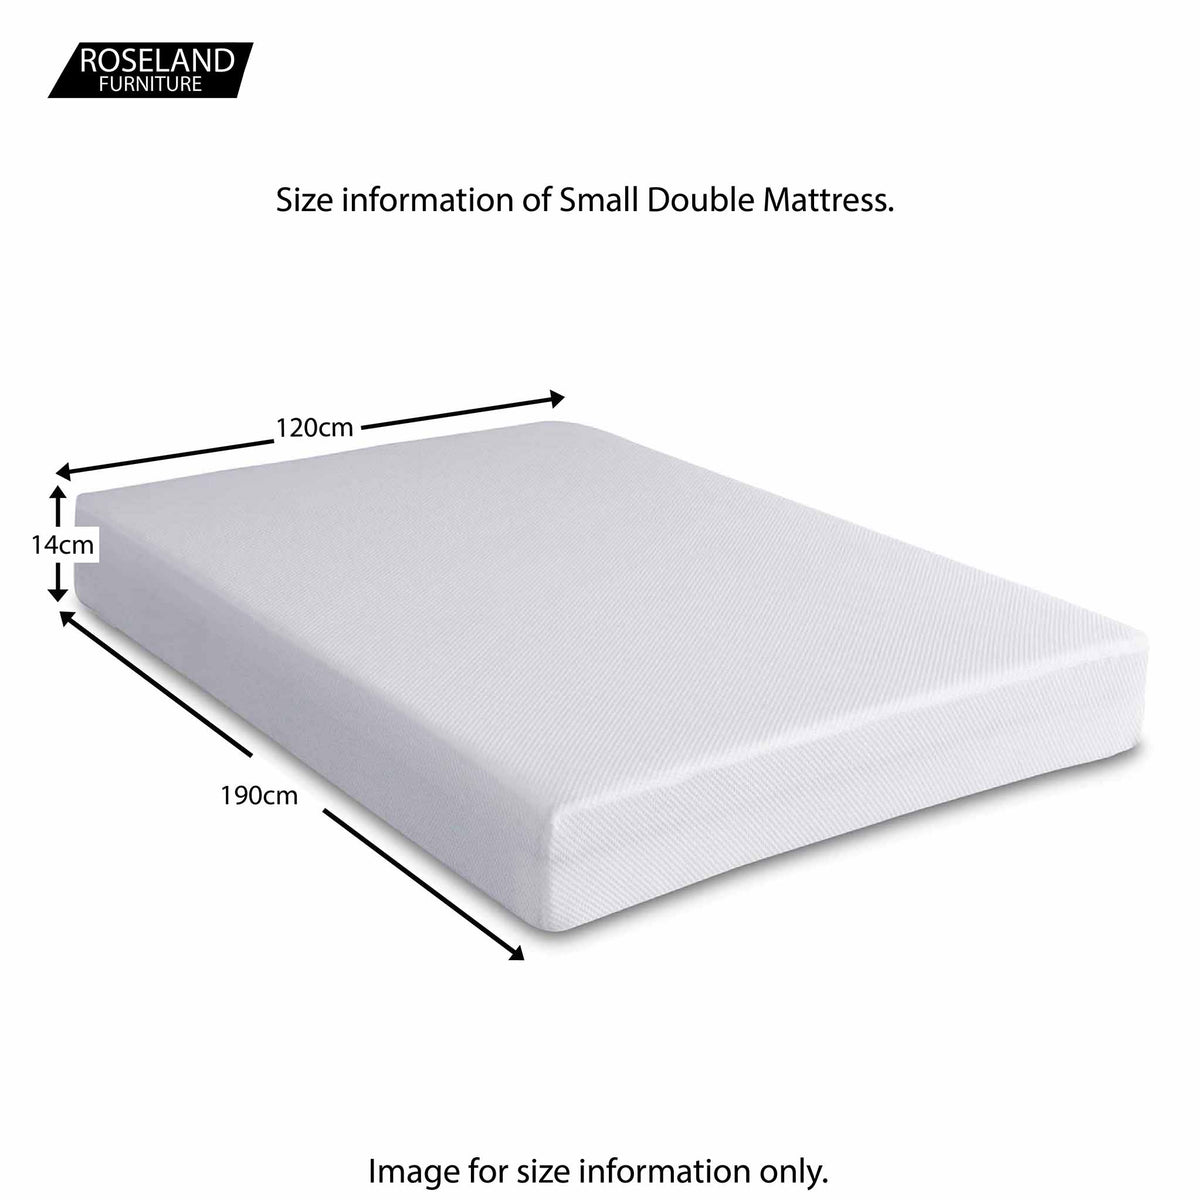 MemoryPedic Cirrus Reflex Foam Mattresses - kids 4ft small double size guide